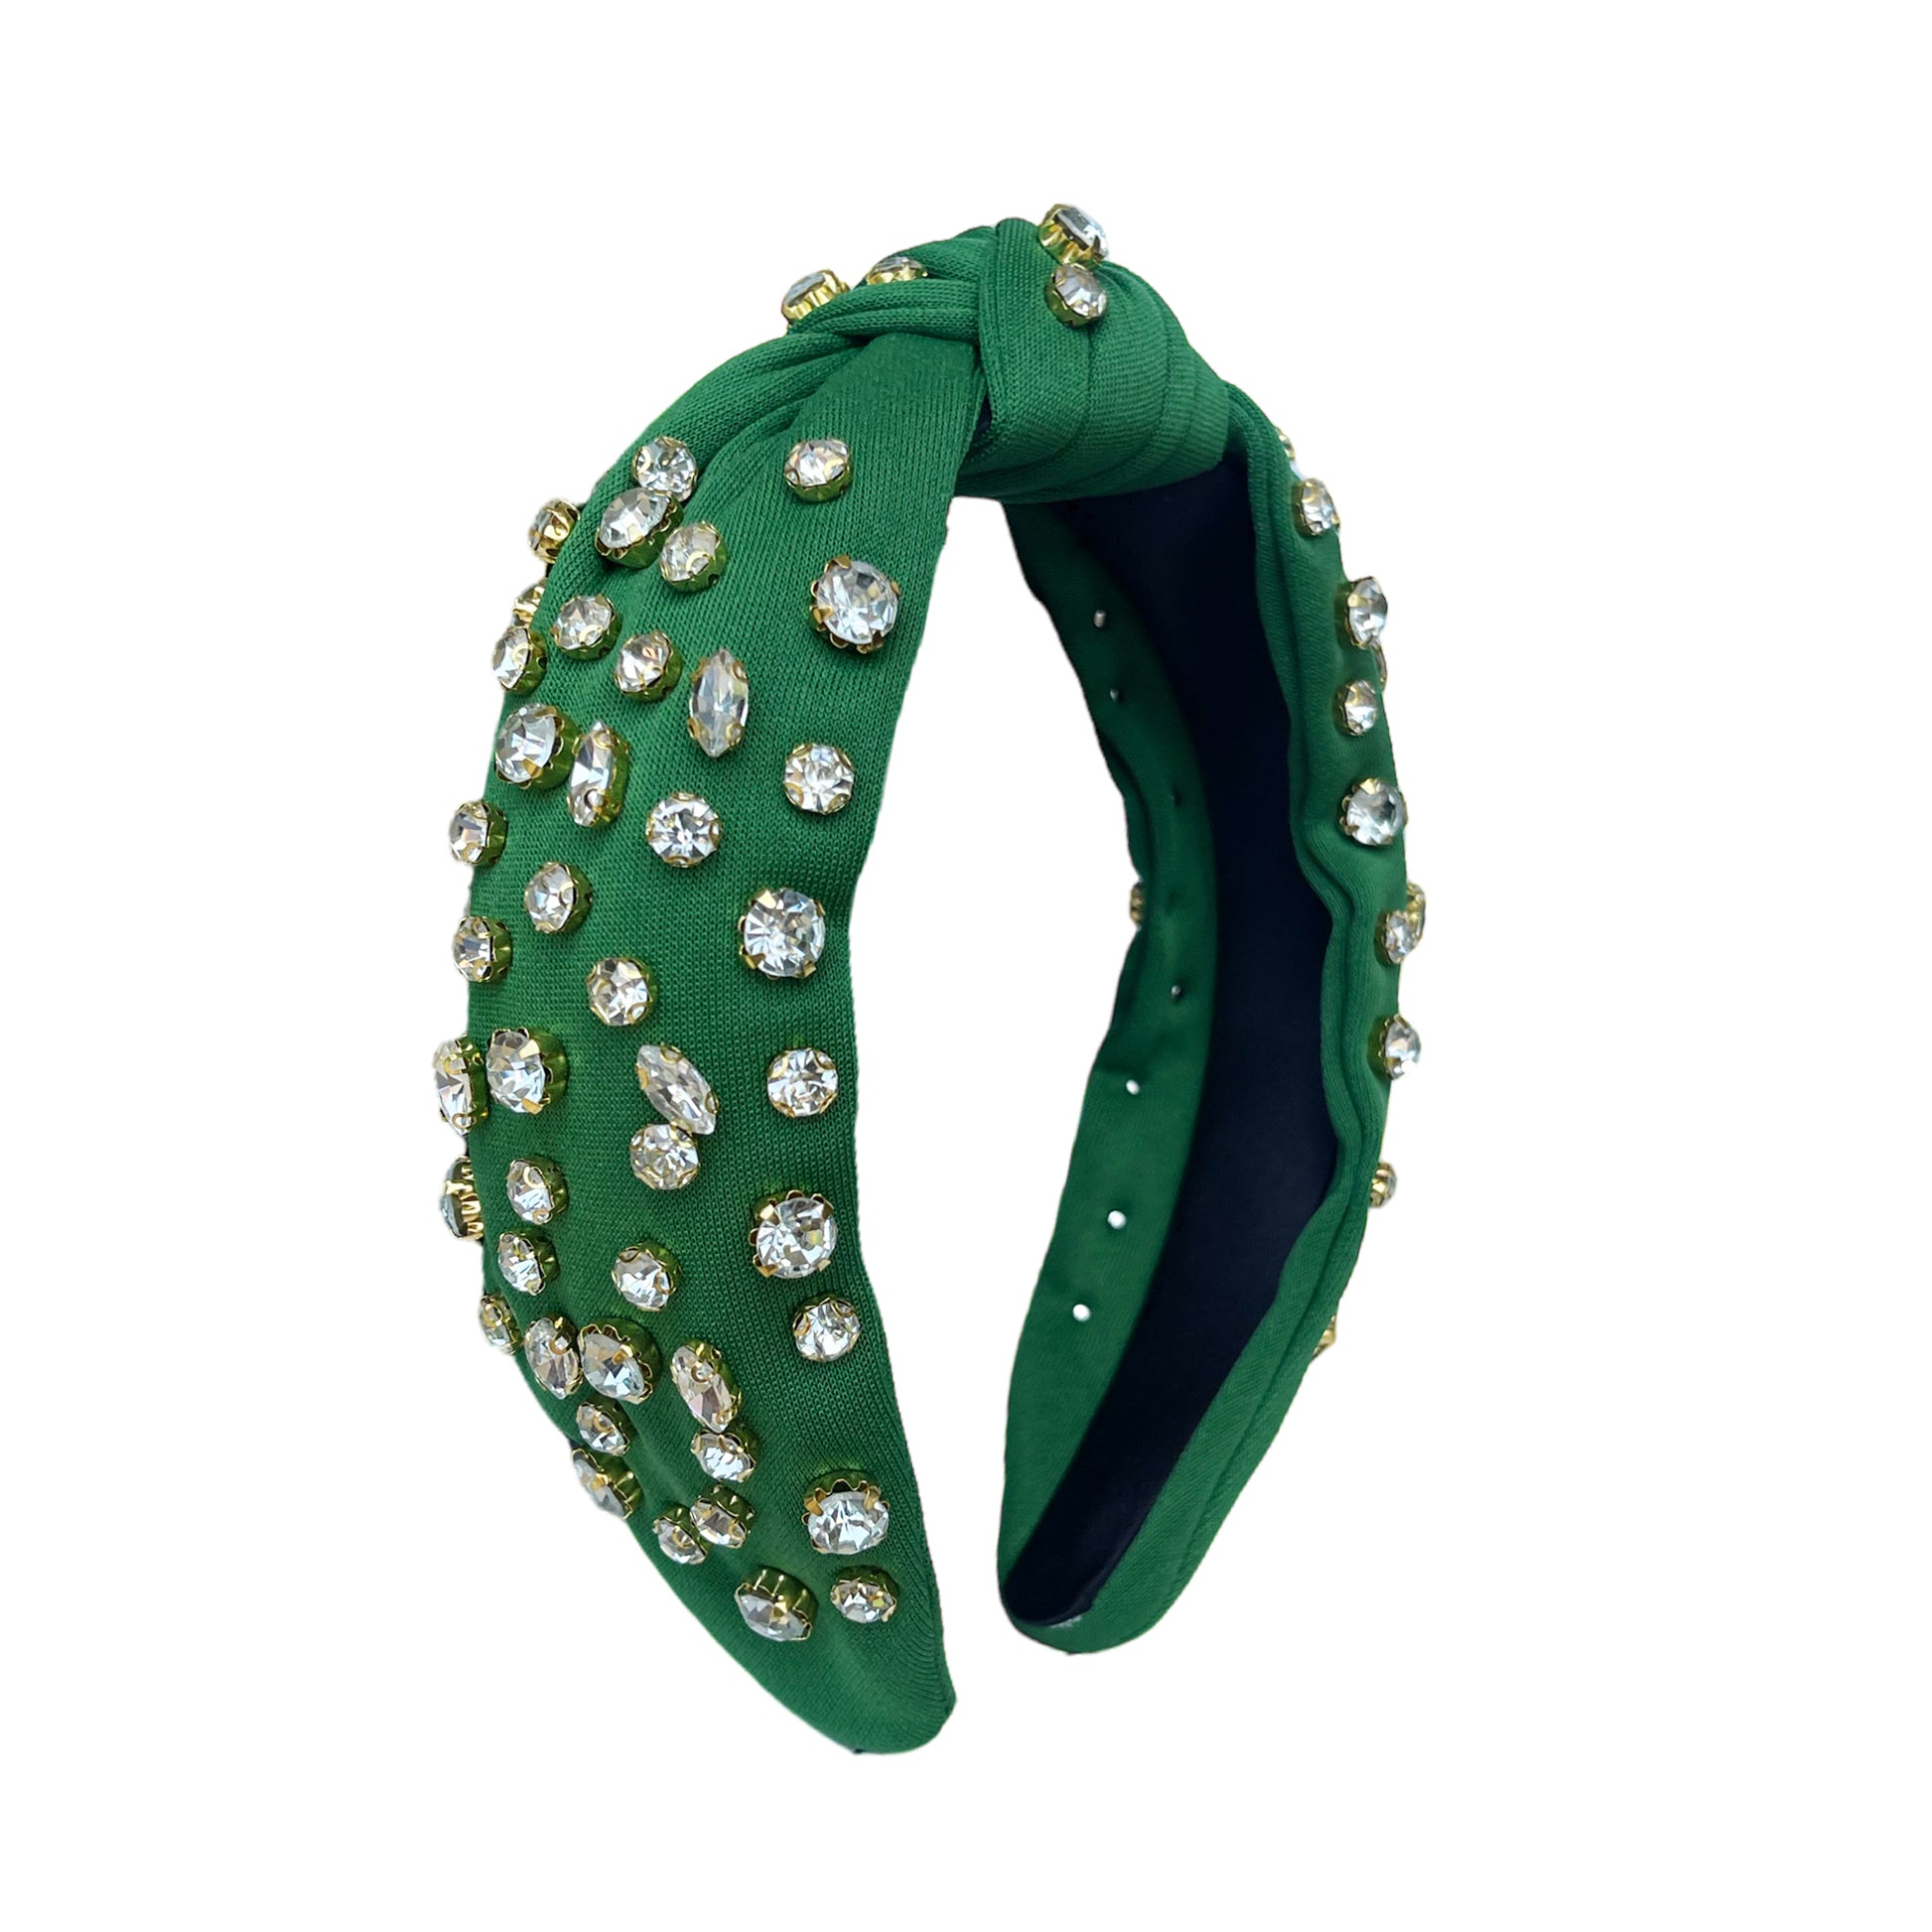 HB-9213 Clear Top Knot Headband Green